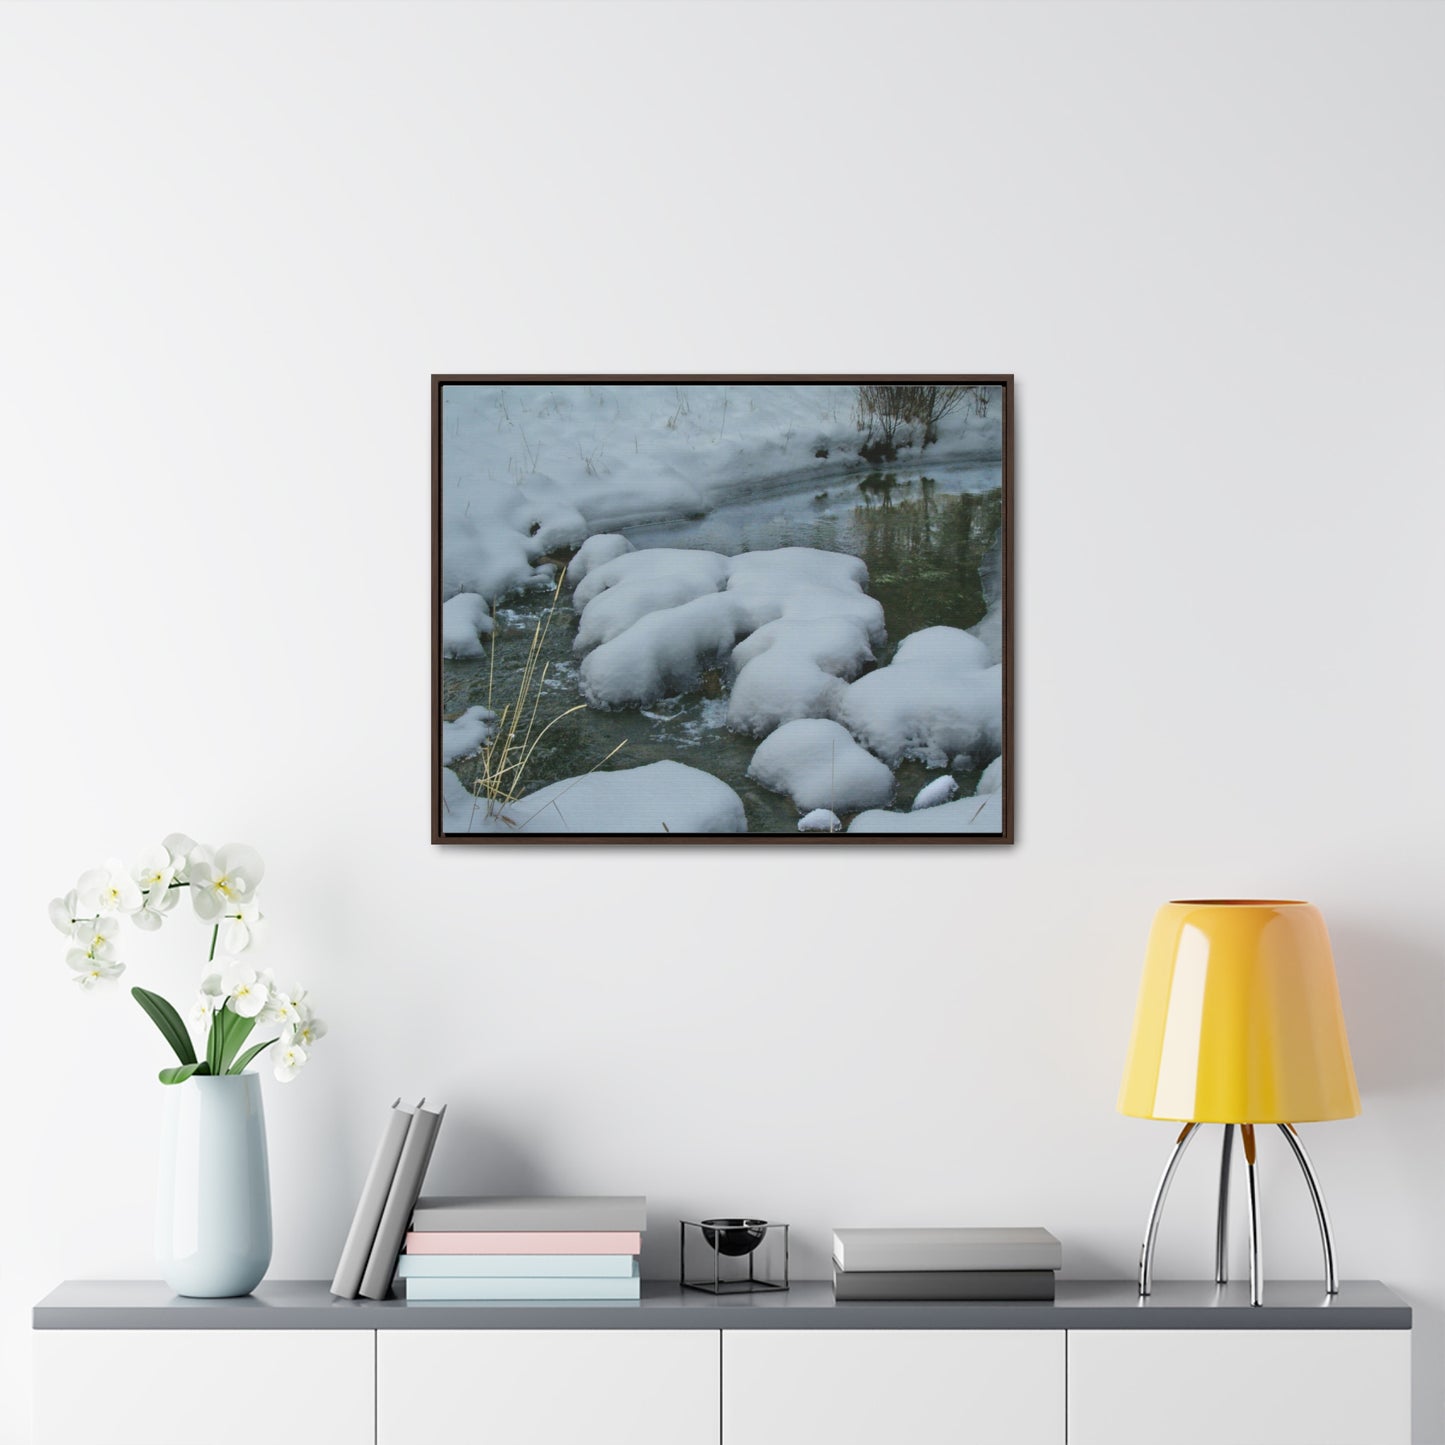 Snowy Islands Gallery Canvas Wraps Framed